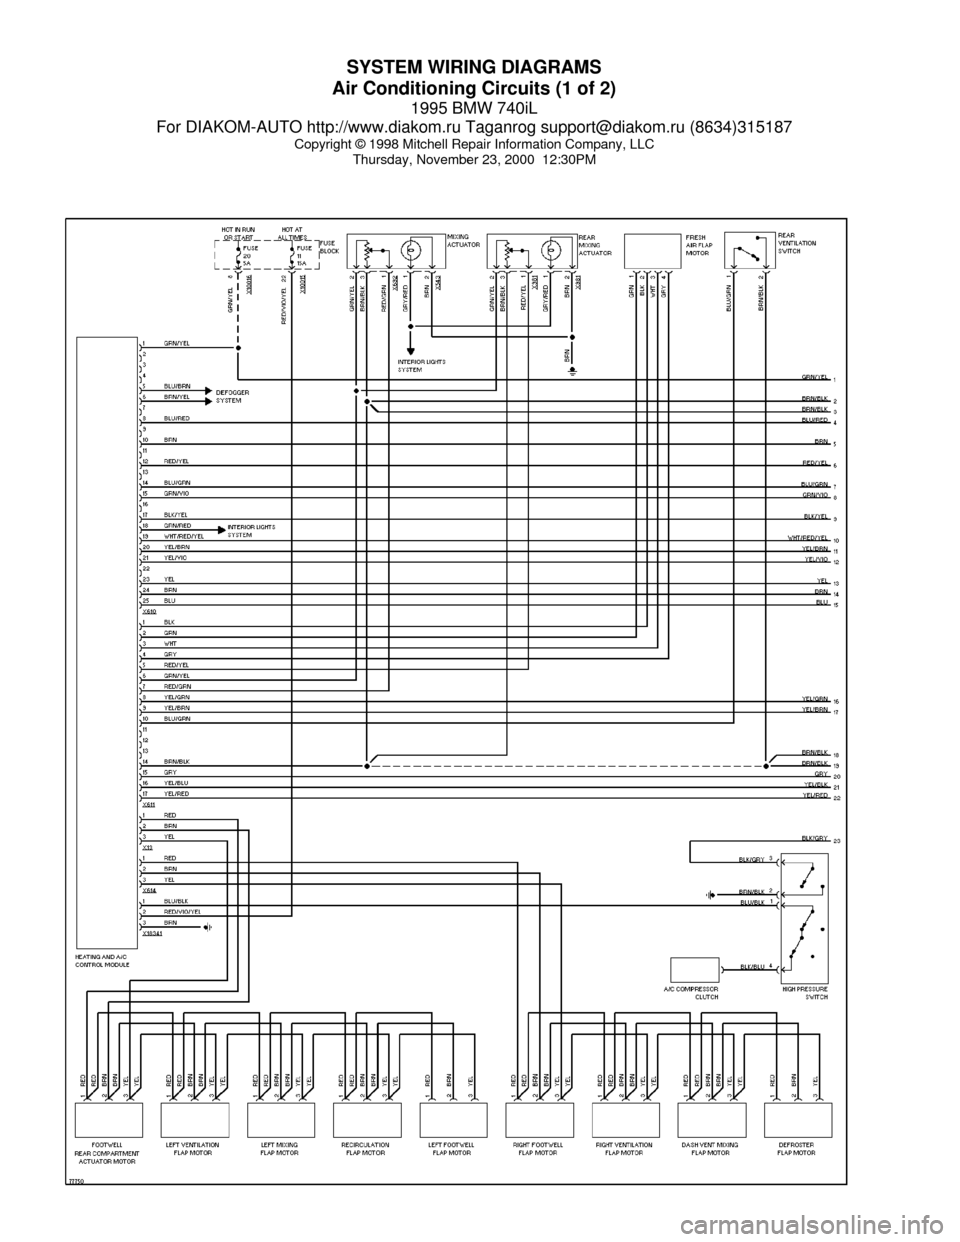 BMW 740il 1995 E38 System Wiring Diagrams SYSTEM WIRING DIAGRAMS
Air Conditioning Circuits (1 of 2)
1995 BMW 740iL
For DIAKOM-AUTO http://www.diakom.ru Taganrog support@diakom.ru (8634)315187
Copyright © 1998 Mitchell Repair Information Comp